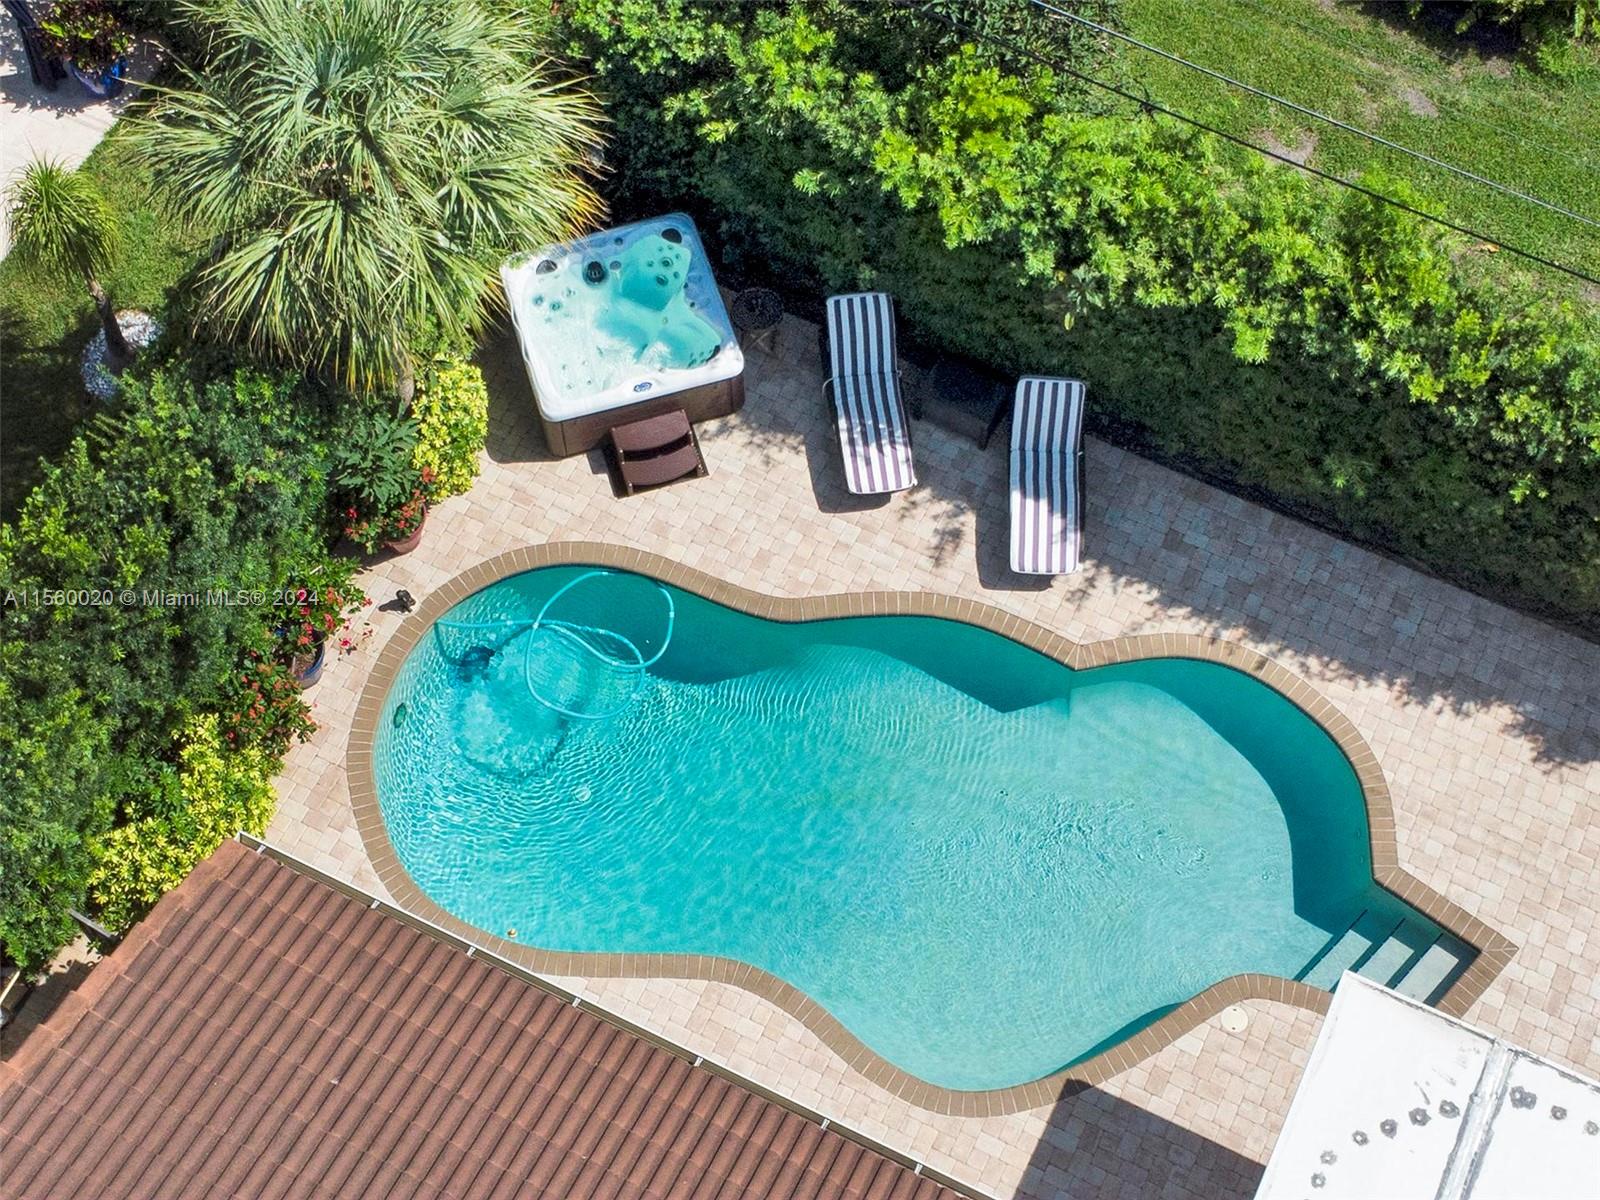 Property for Sale at 3204 Barton Rd Rd, Pompano Beach, Broward County, Florida - Bedrooms: 3 
Bathrooms: 2  - $1,489,000